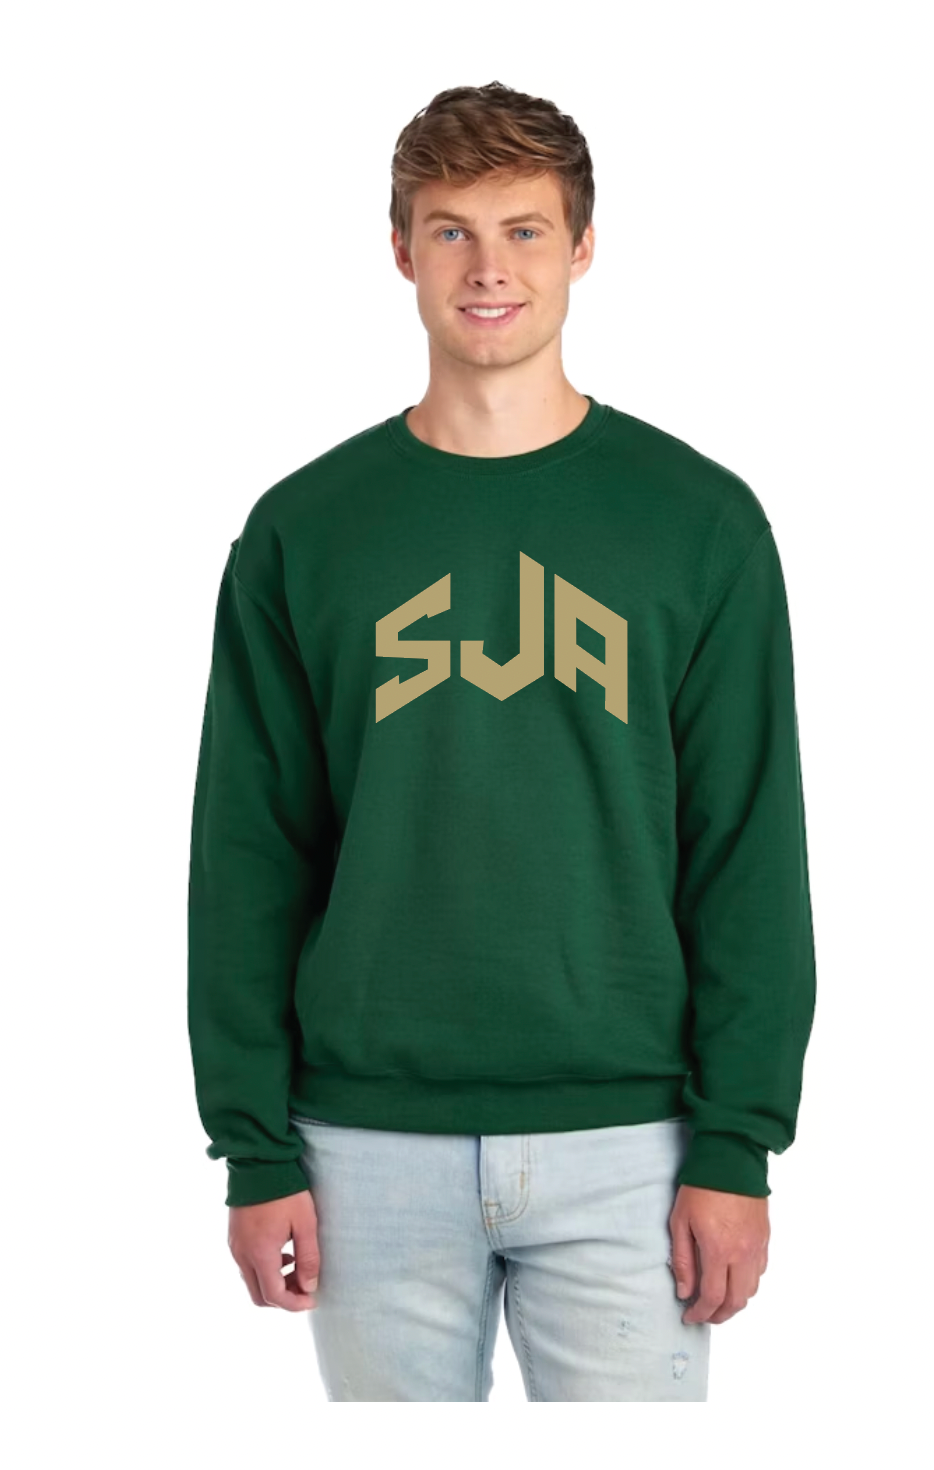 SJA Crewneck Sweatshirt